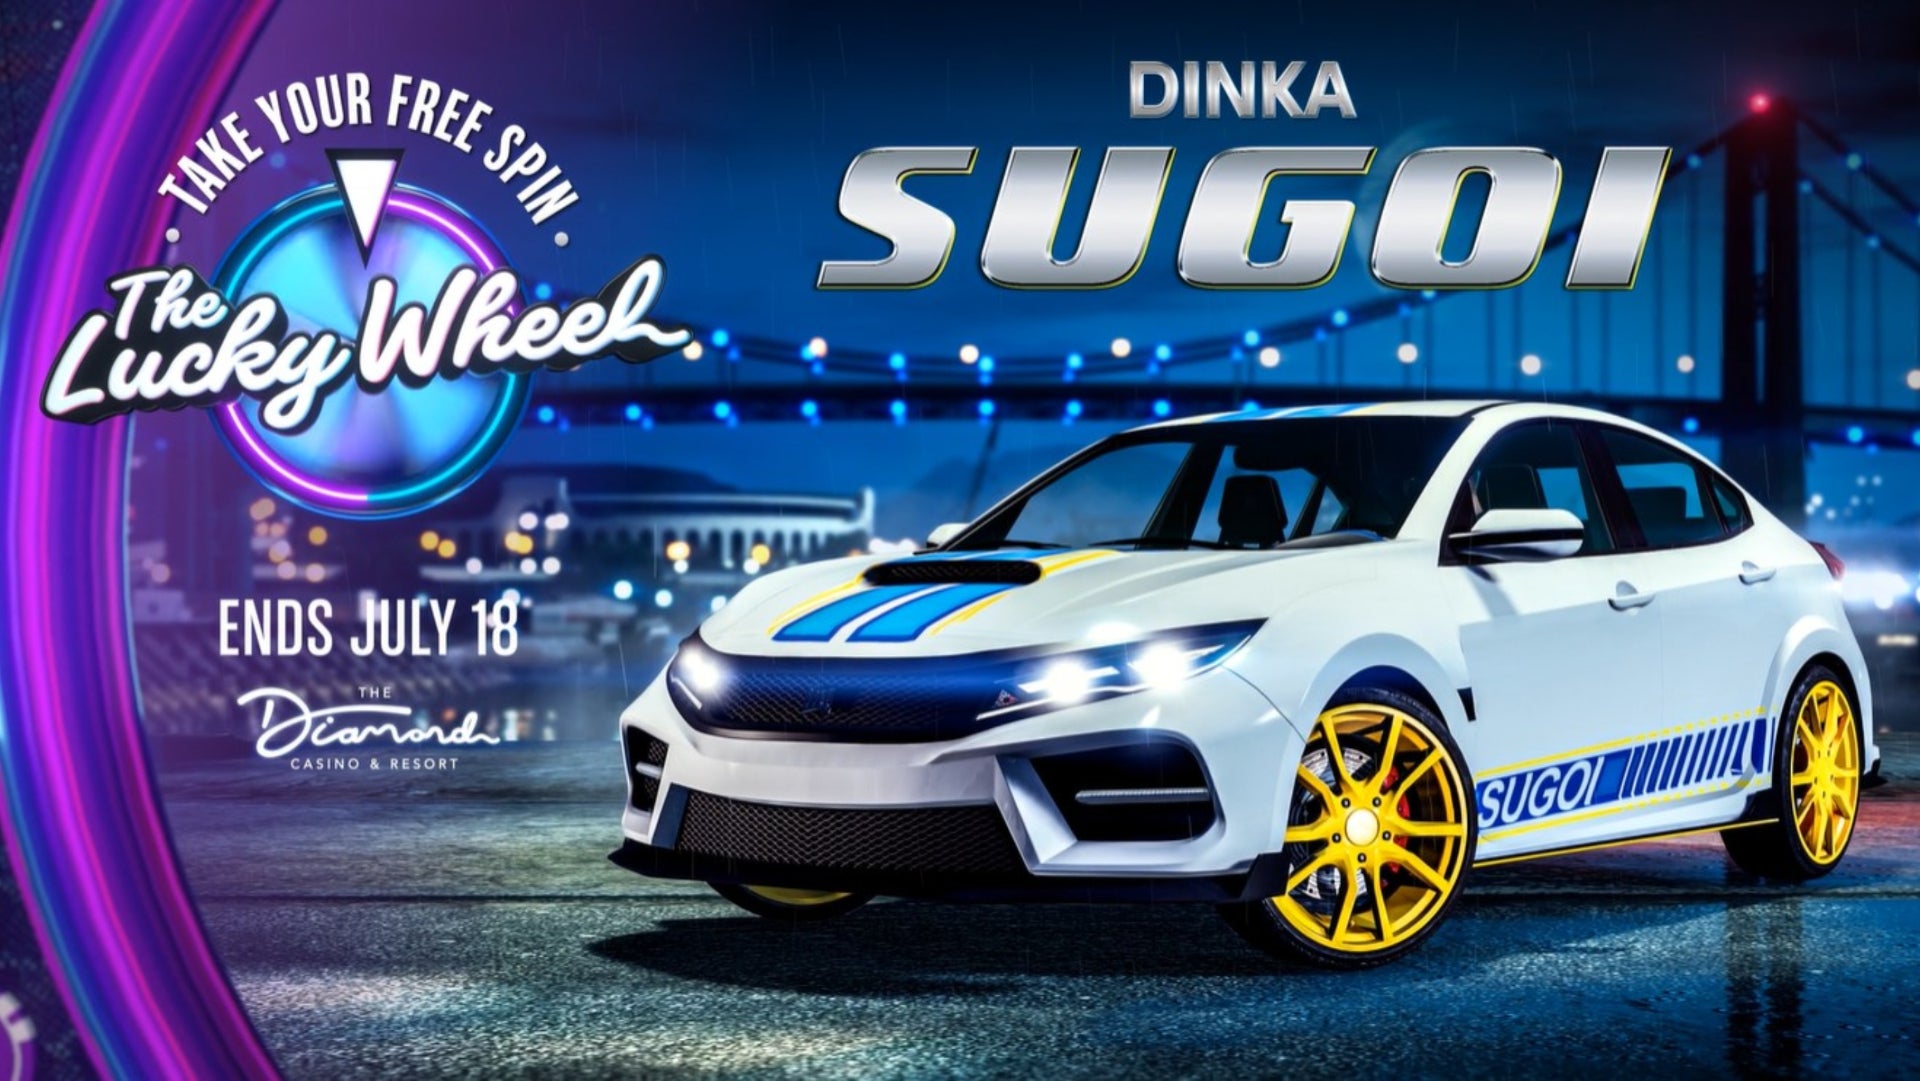 GTA Newswire Podium Car White Dinka Sugoi July 7